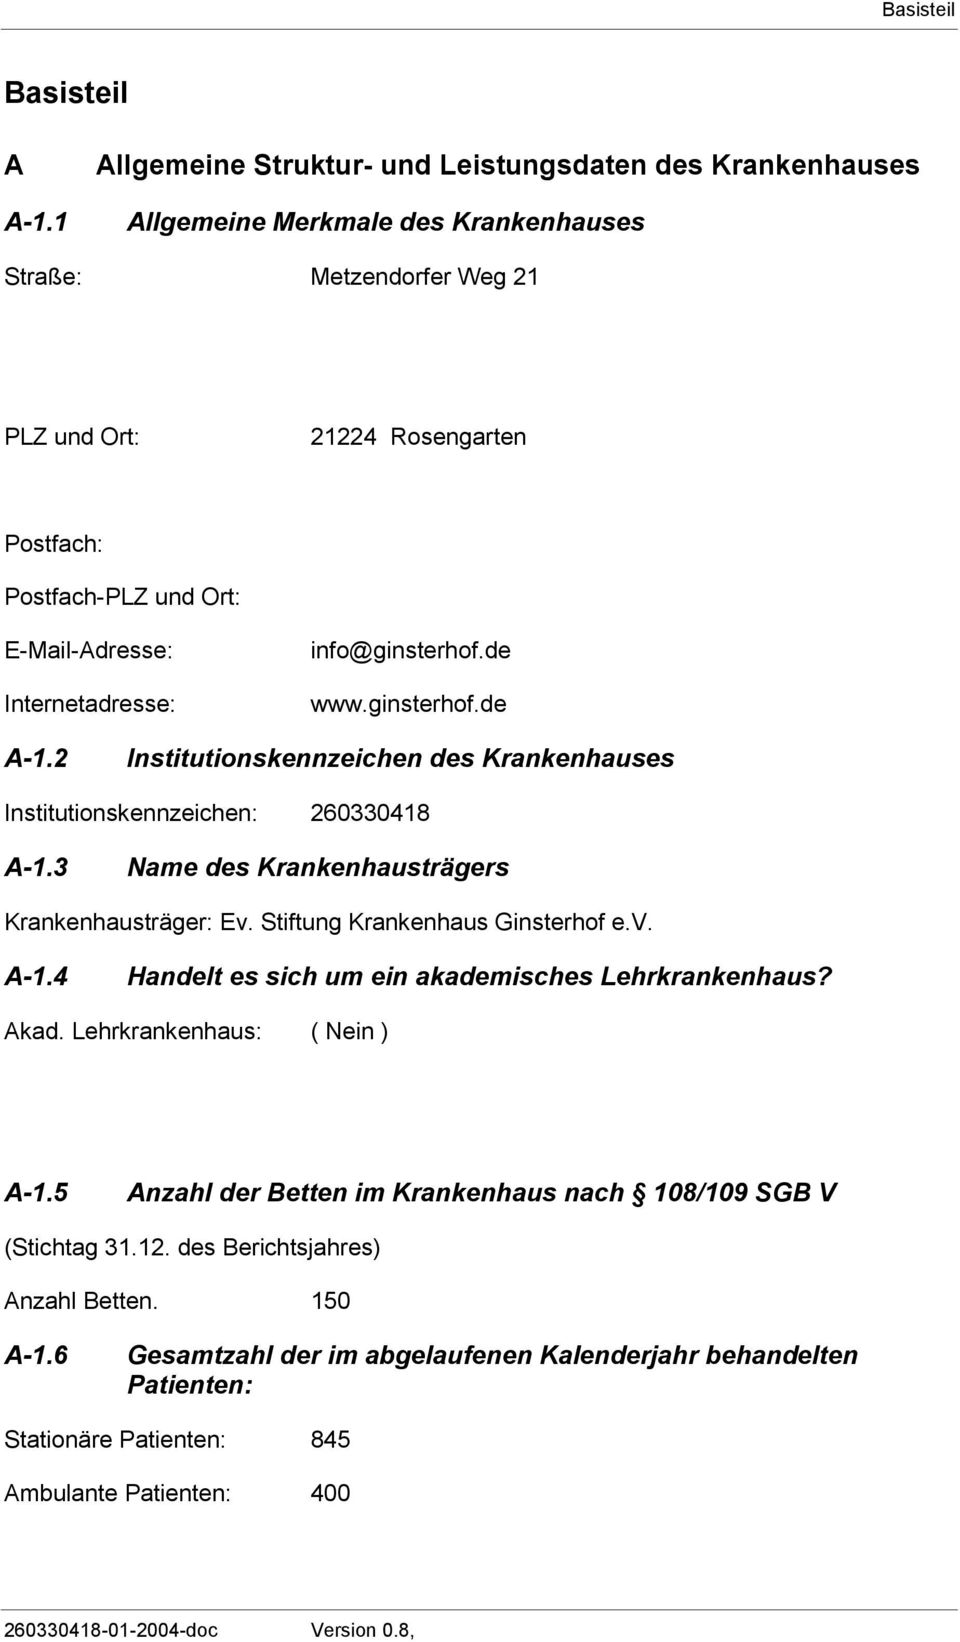 E-Mail-Adresse: Internetadresse: info@ginsterhof.de www.ginsterhof.de A-1.2 Institutionskennzeichen des Krankenhauses Institutionskennzeichen: 260330418 A-1.